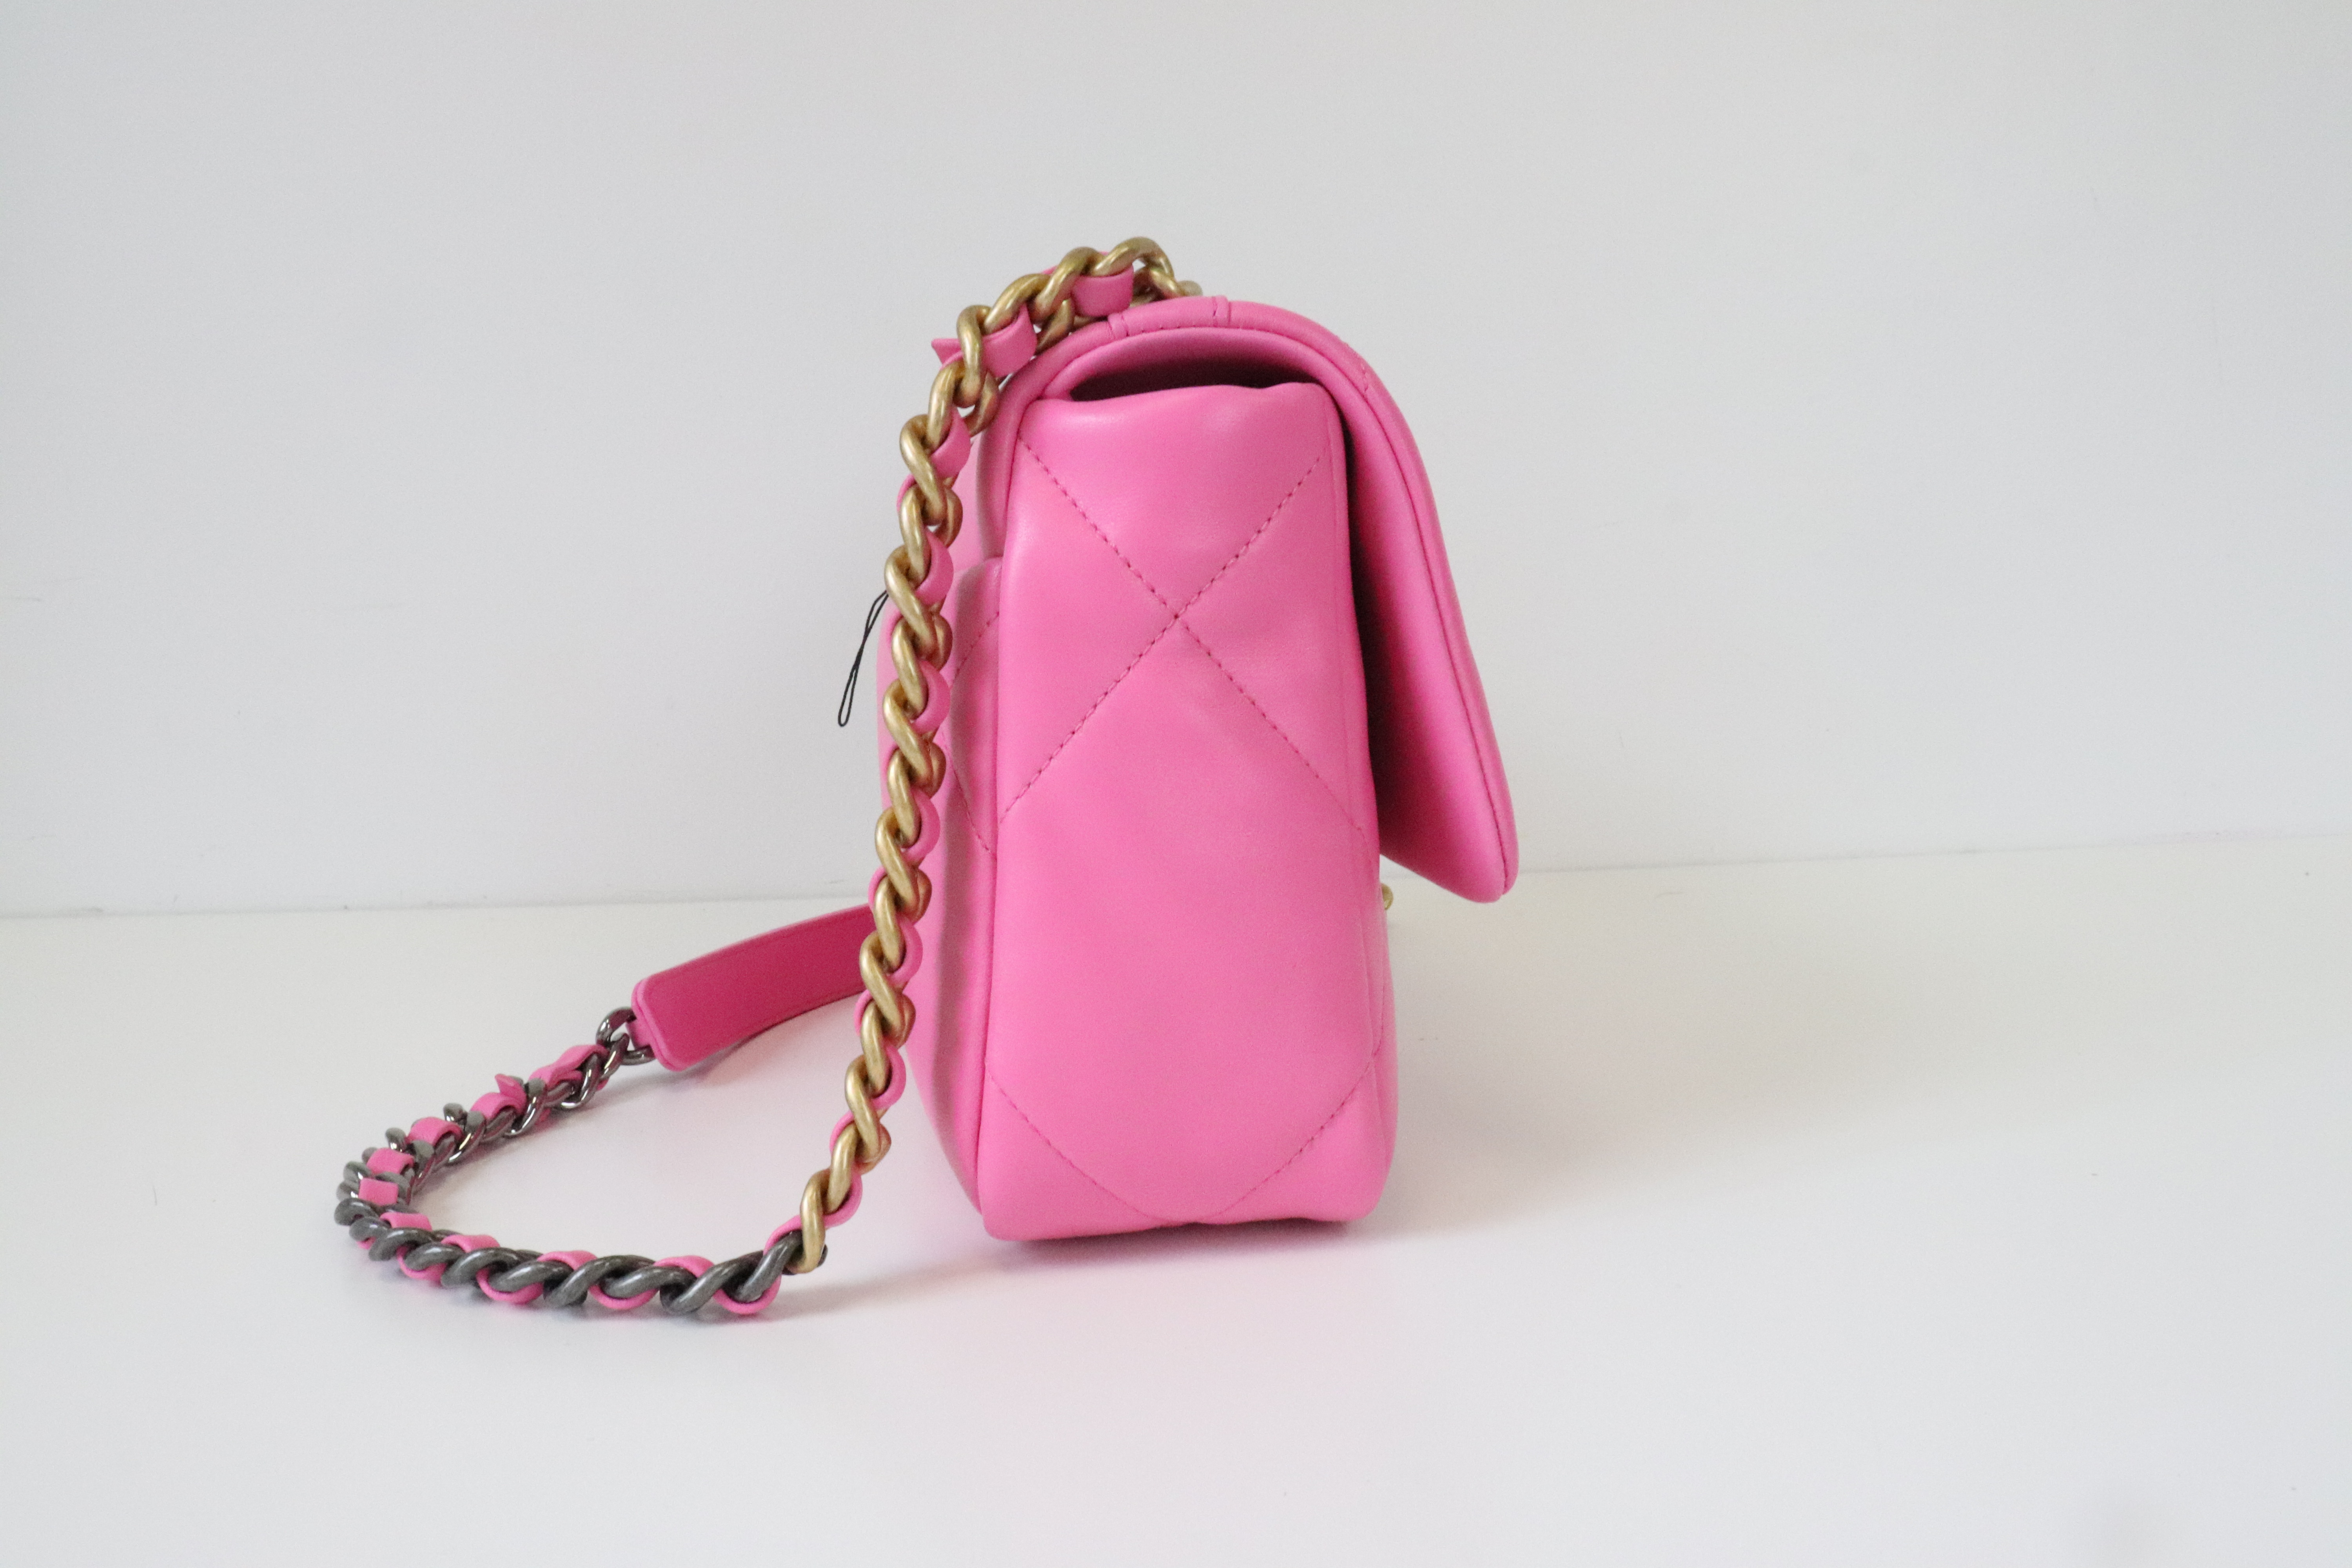 Chanel 19 Small, 22K Hot Pink Lambskin, New in Box MA001 - Julia Rose  Boston